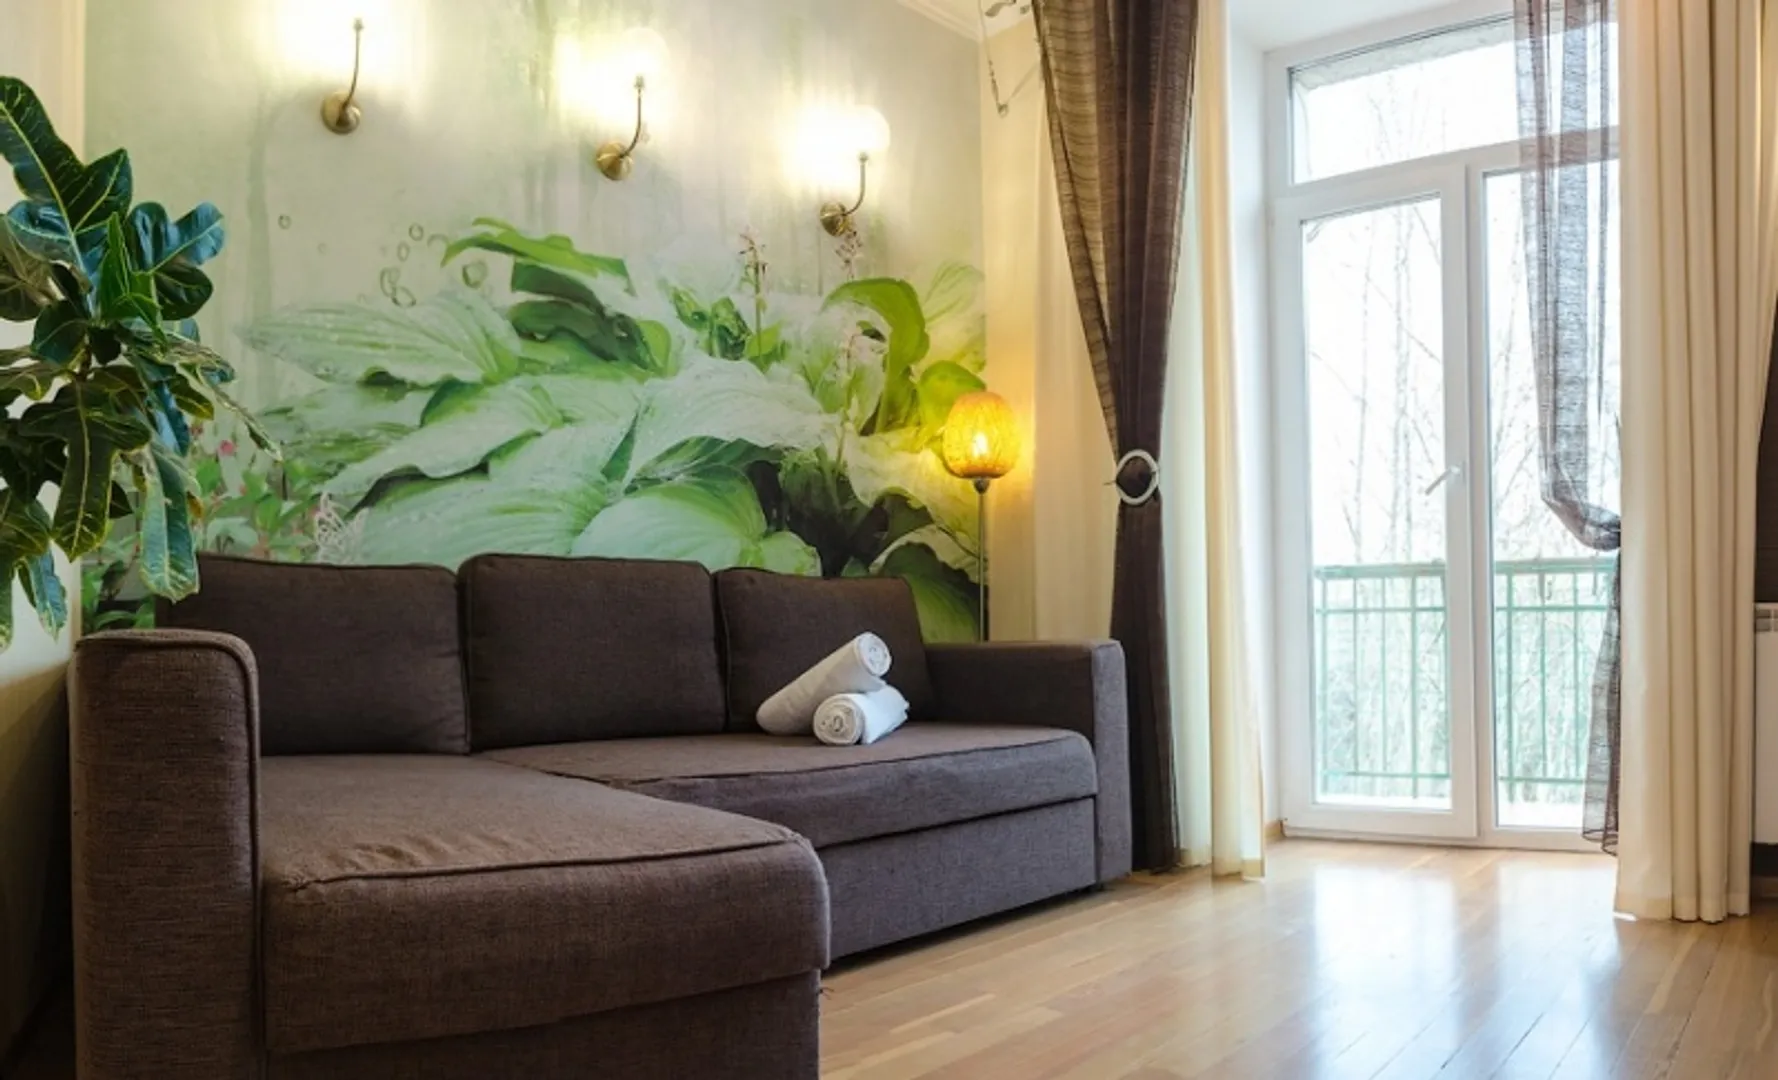 Французкий балкон и двуспальный диван 180Х200